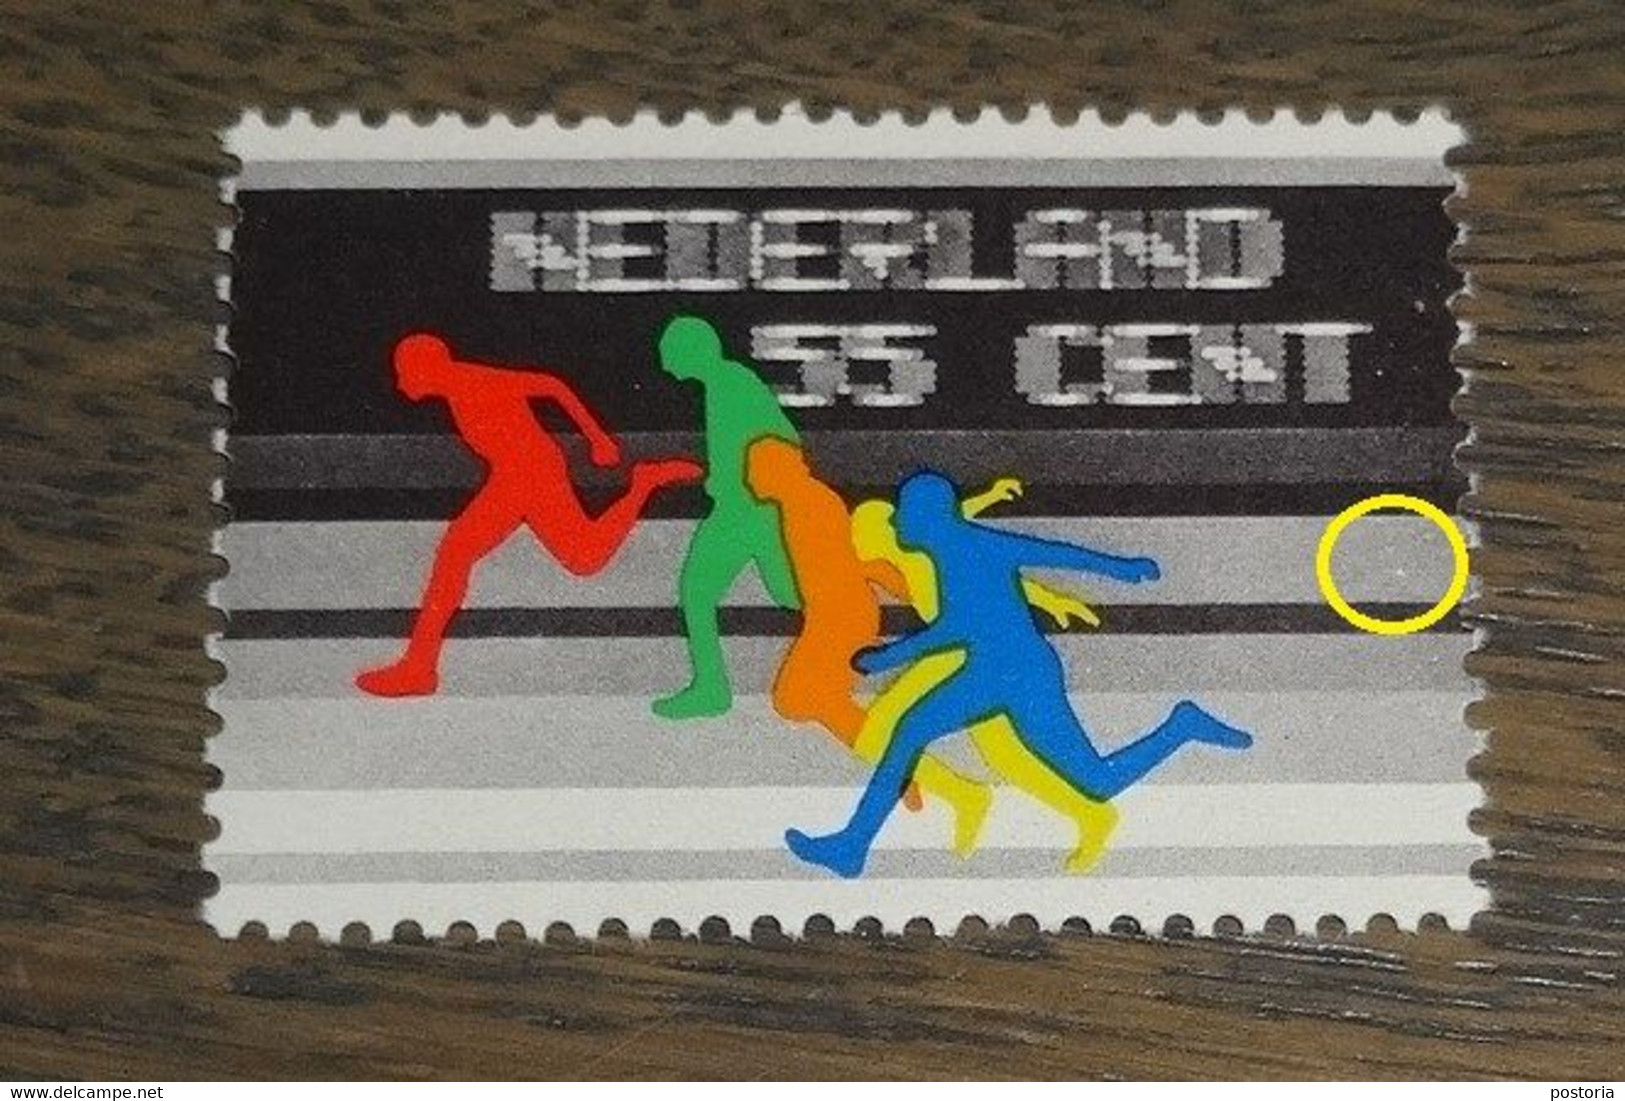 Nederland - MAST - 1093 PM2 - 1976 - Plaatfout - Postfris - Witte Punt Rechts Midden - Varietà & Curiosità